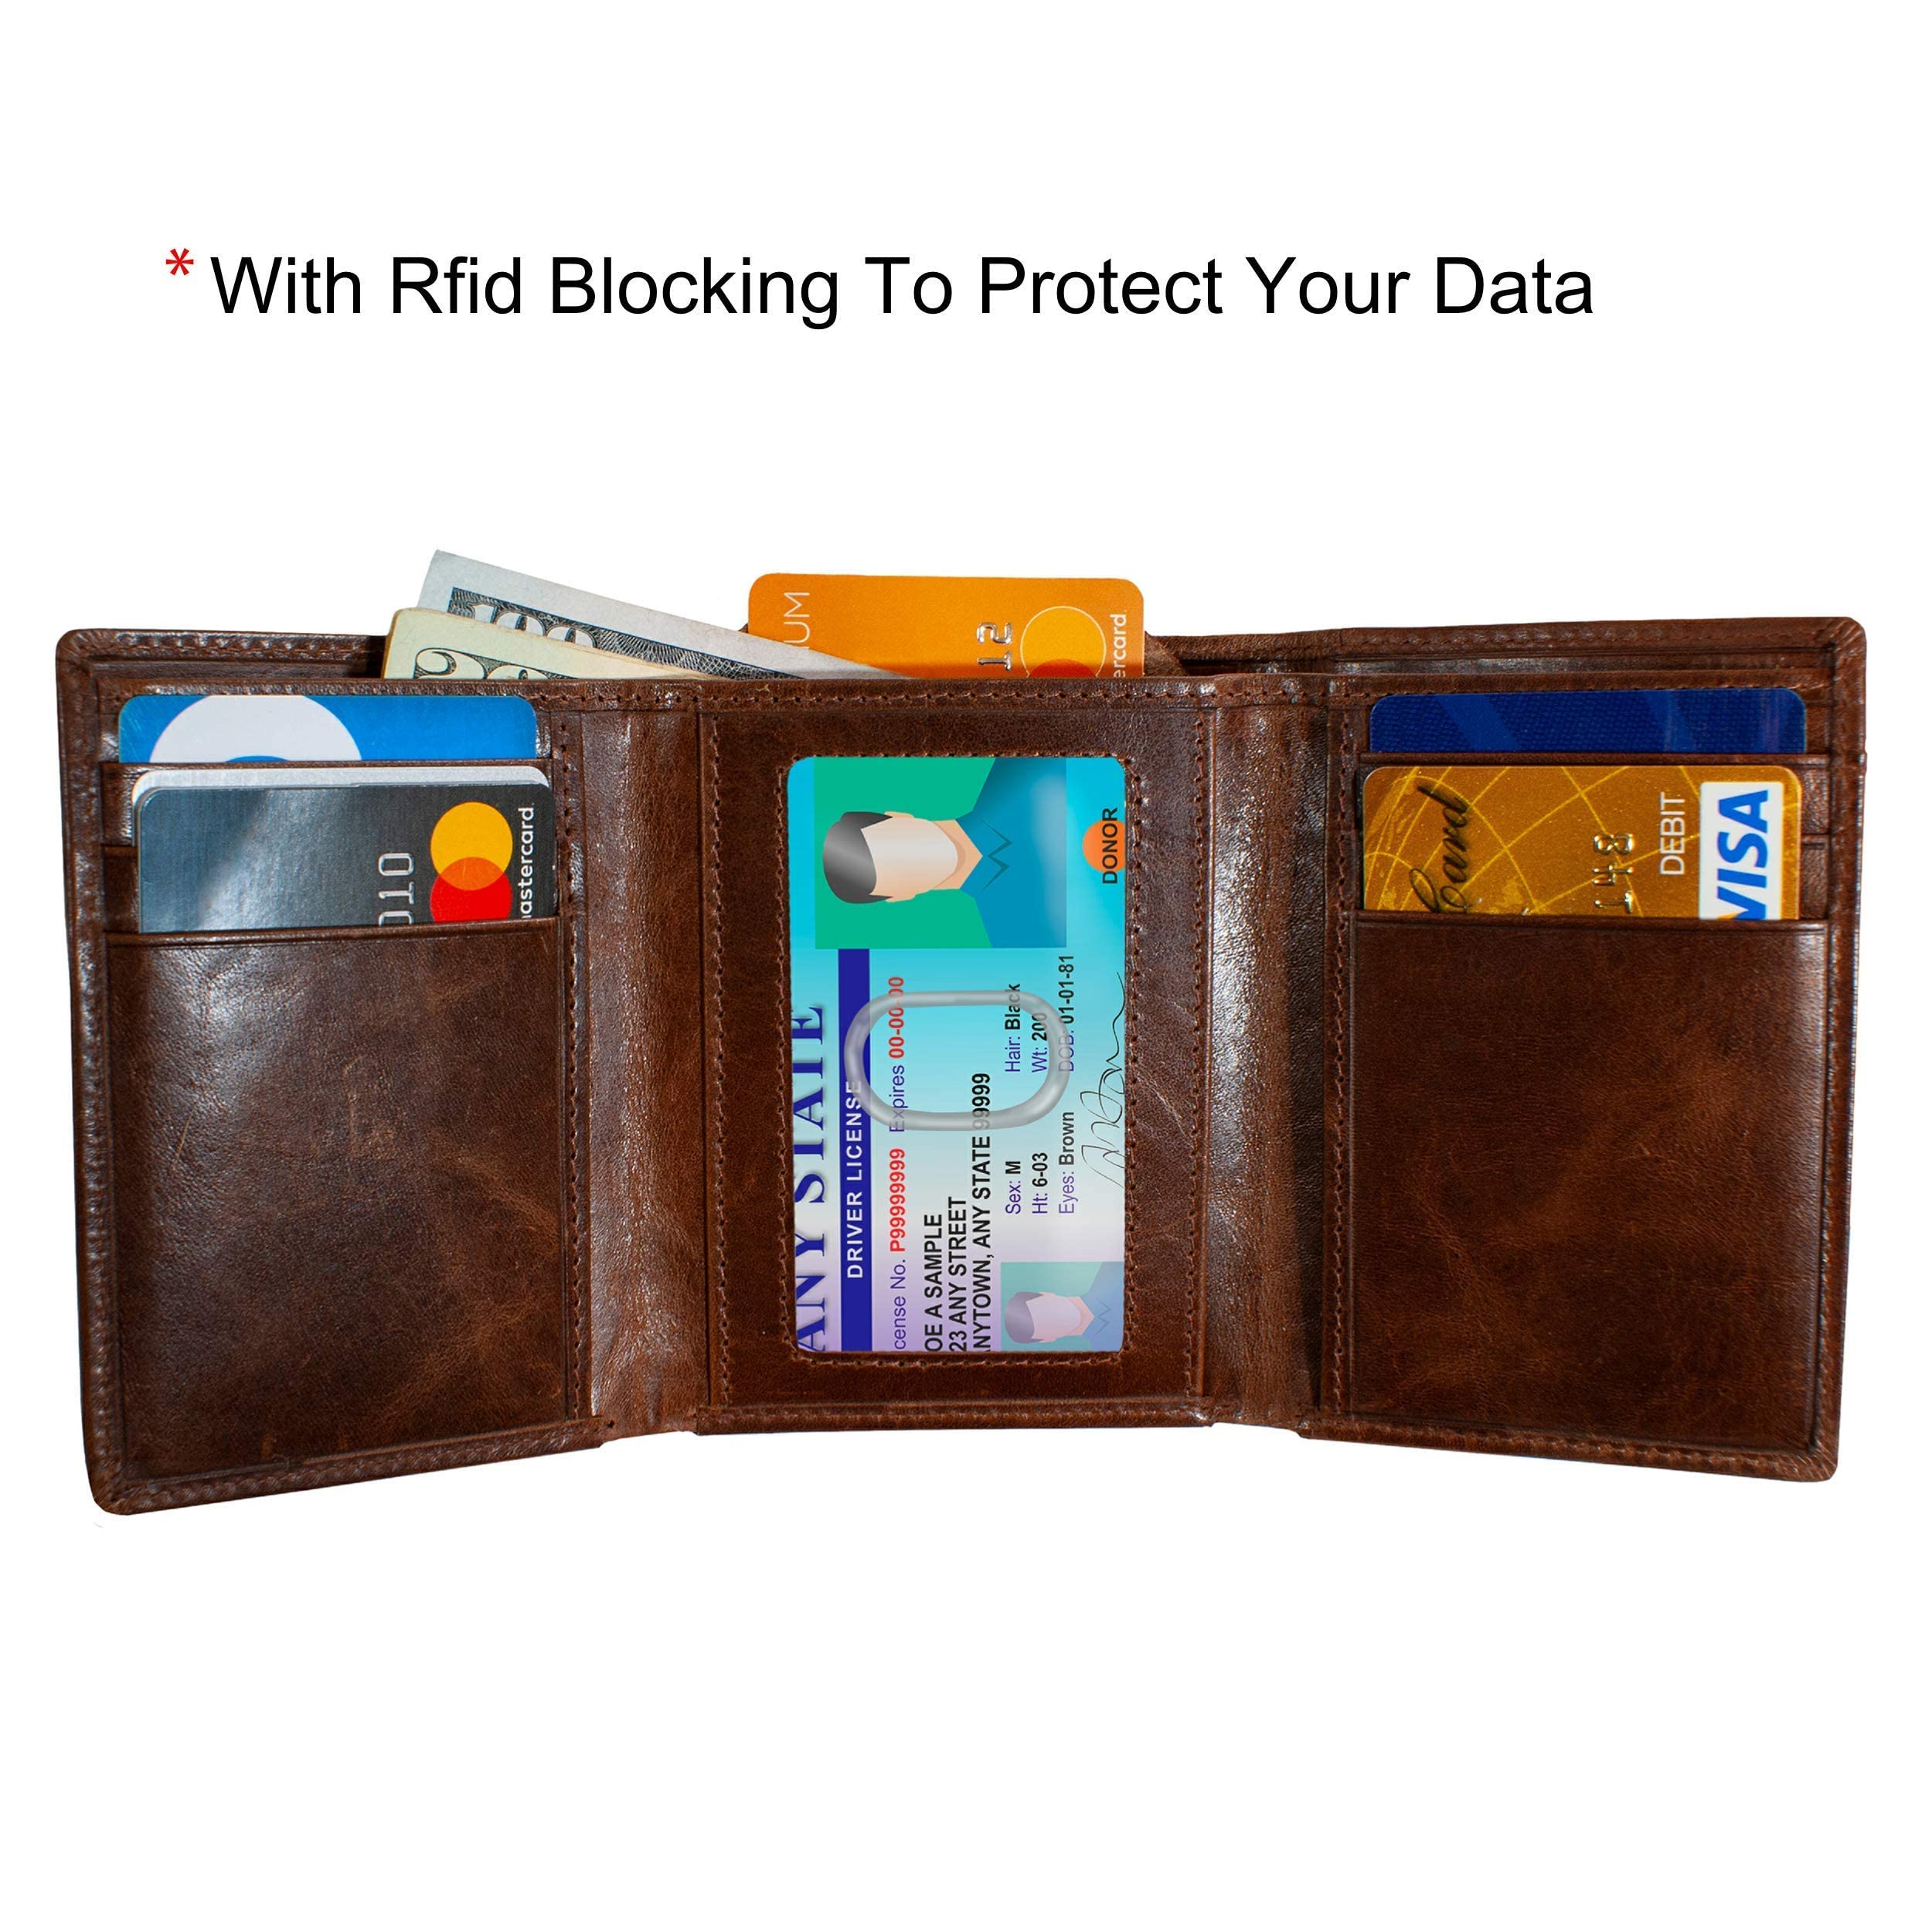 RFID blocking Security